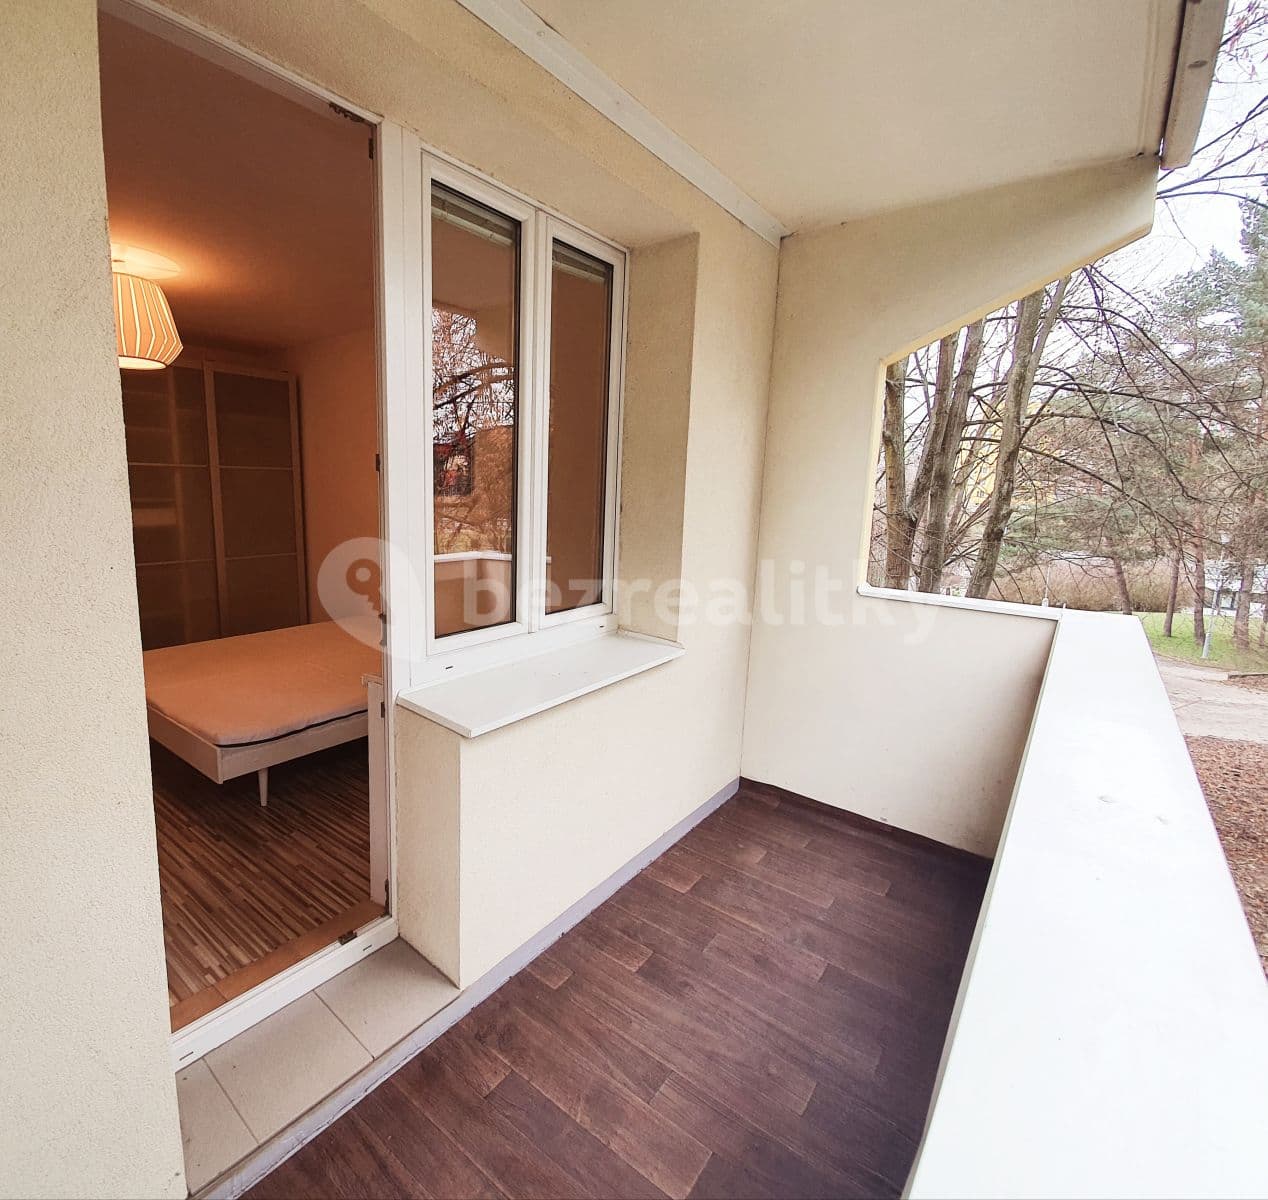 2 bedroom flat to rent, 58 m², Vondrákova, Brno, Jihomoravský Region